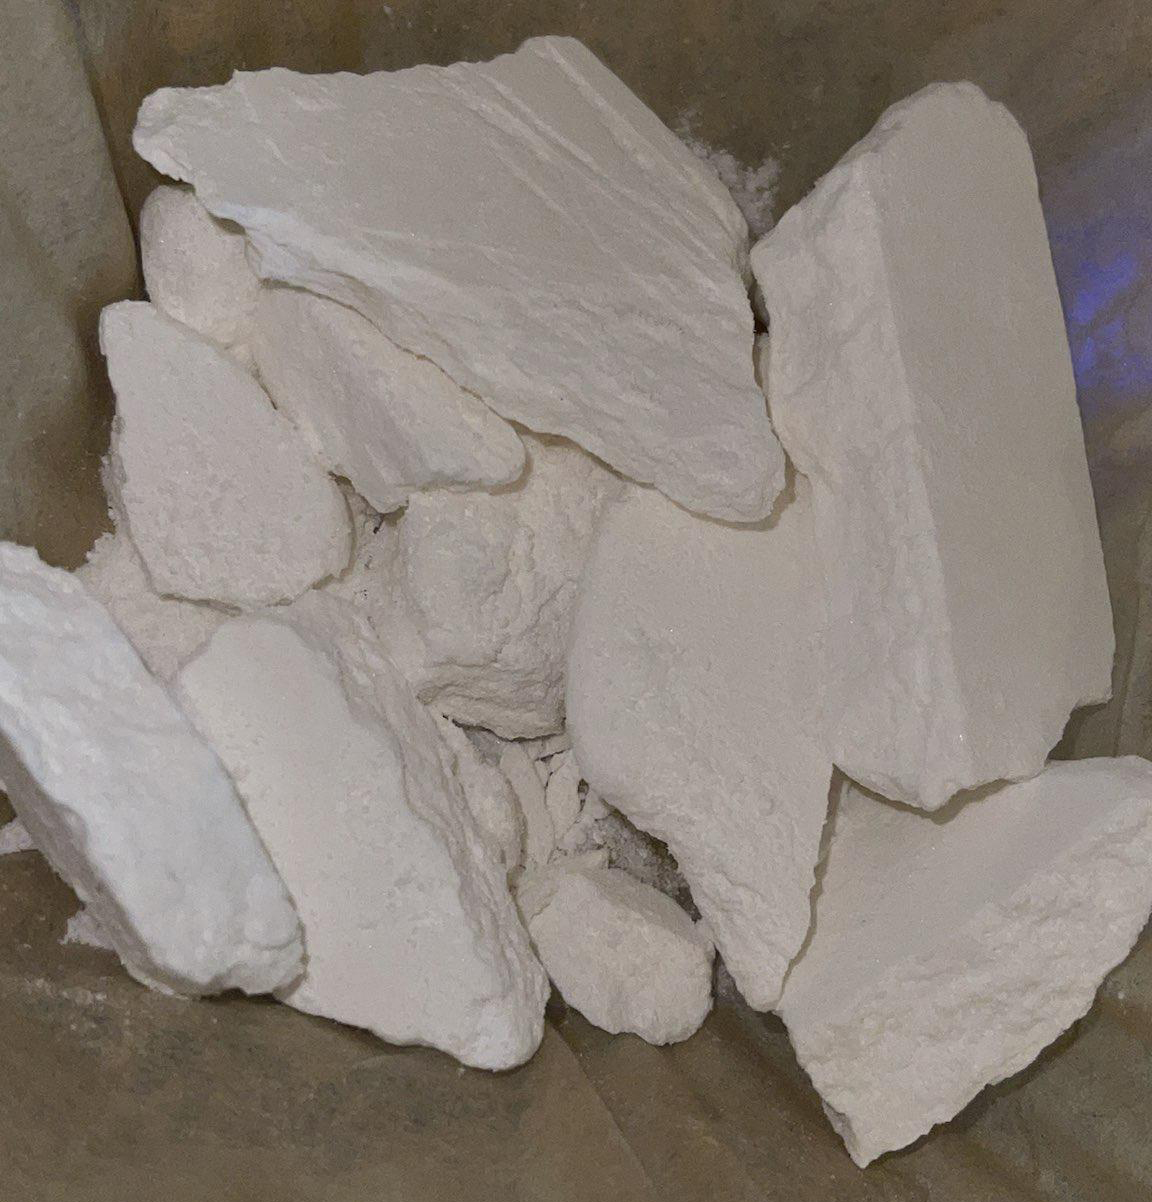 14g-224g STRONG SOCIABLE REROCK Cocaine (US 2 US) Image